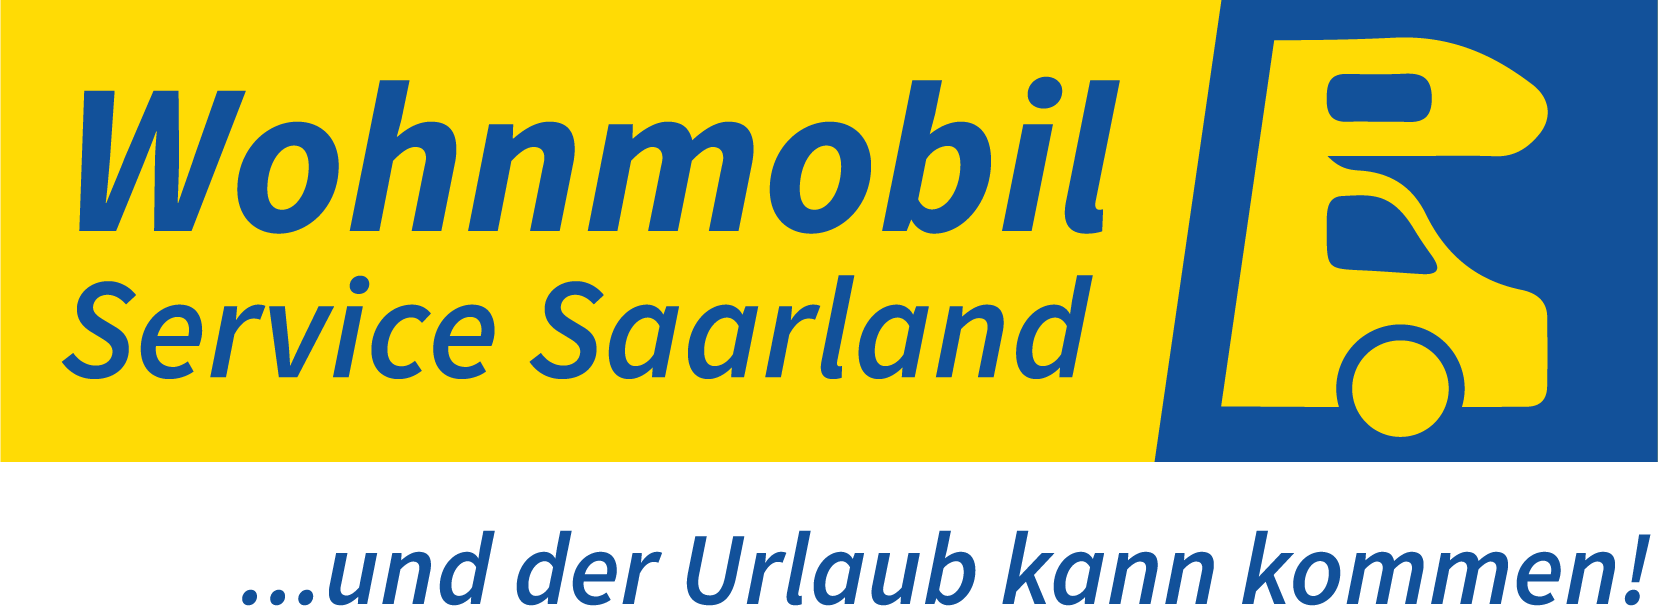 Wohnmobil Service Saarland